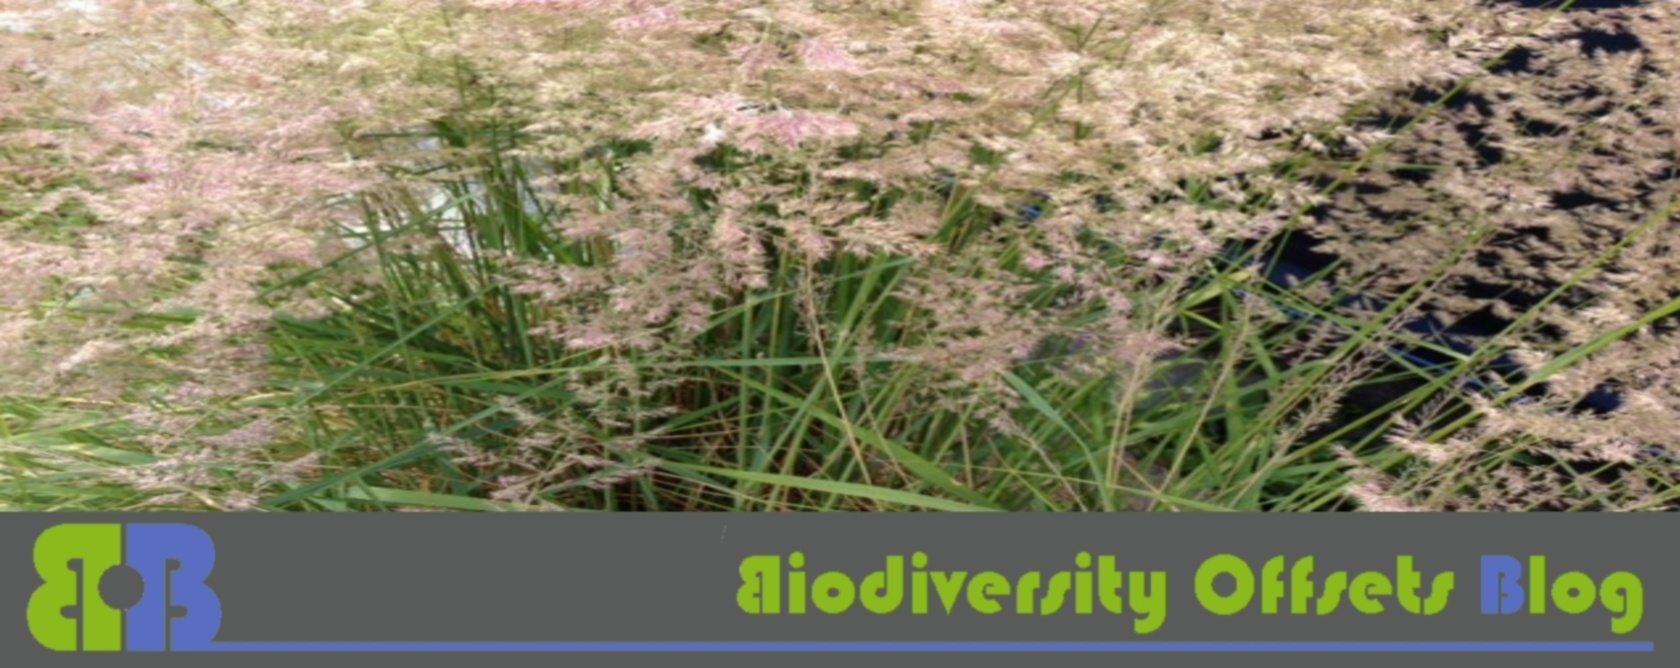 Biodiversity Offsets Blog Logo_hellgruen_Gräser_1680